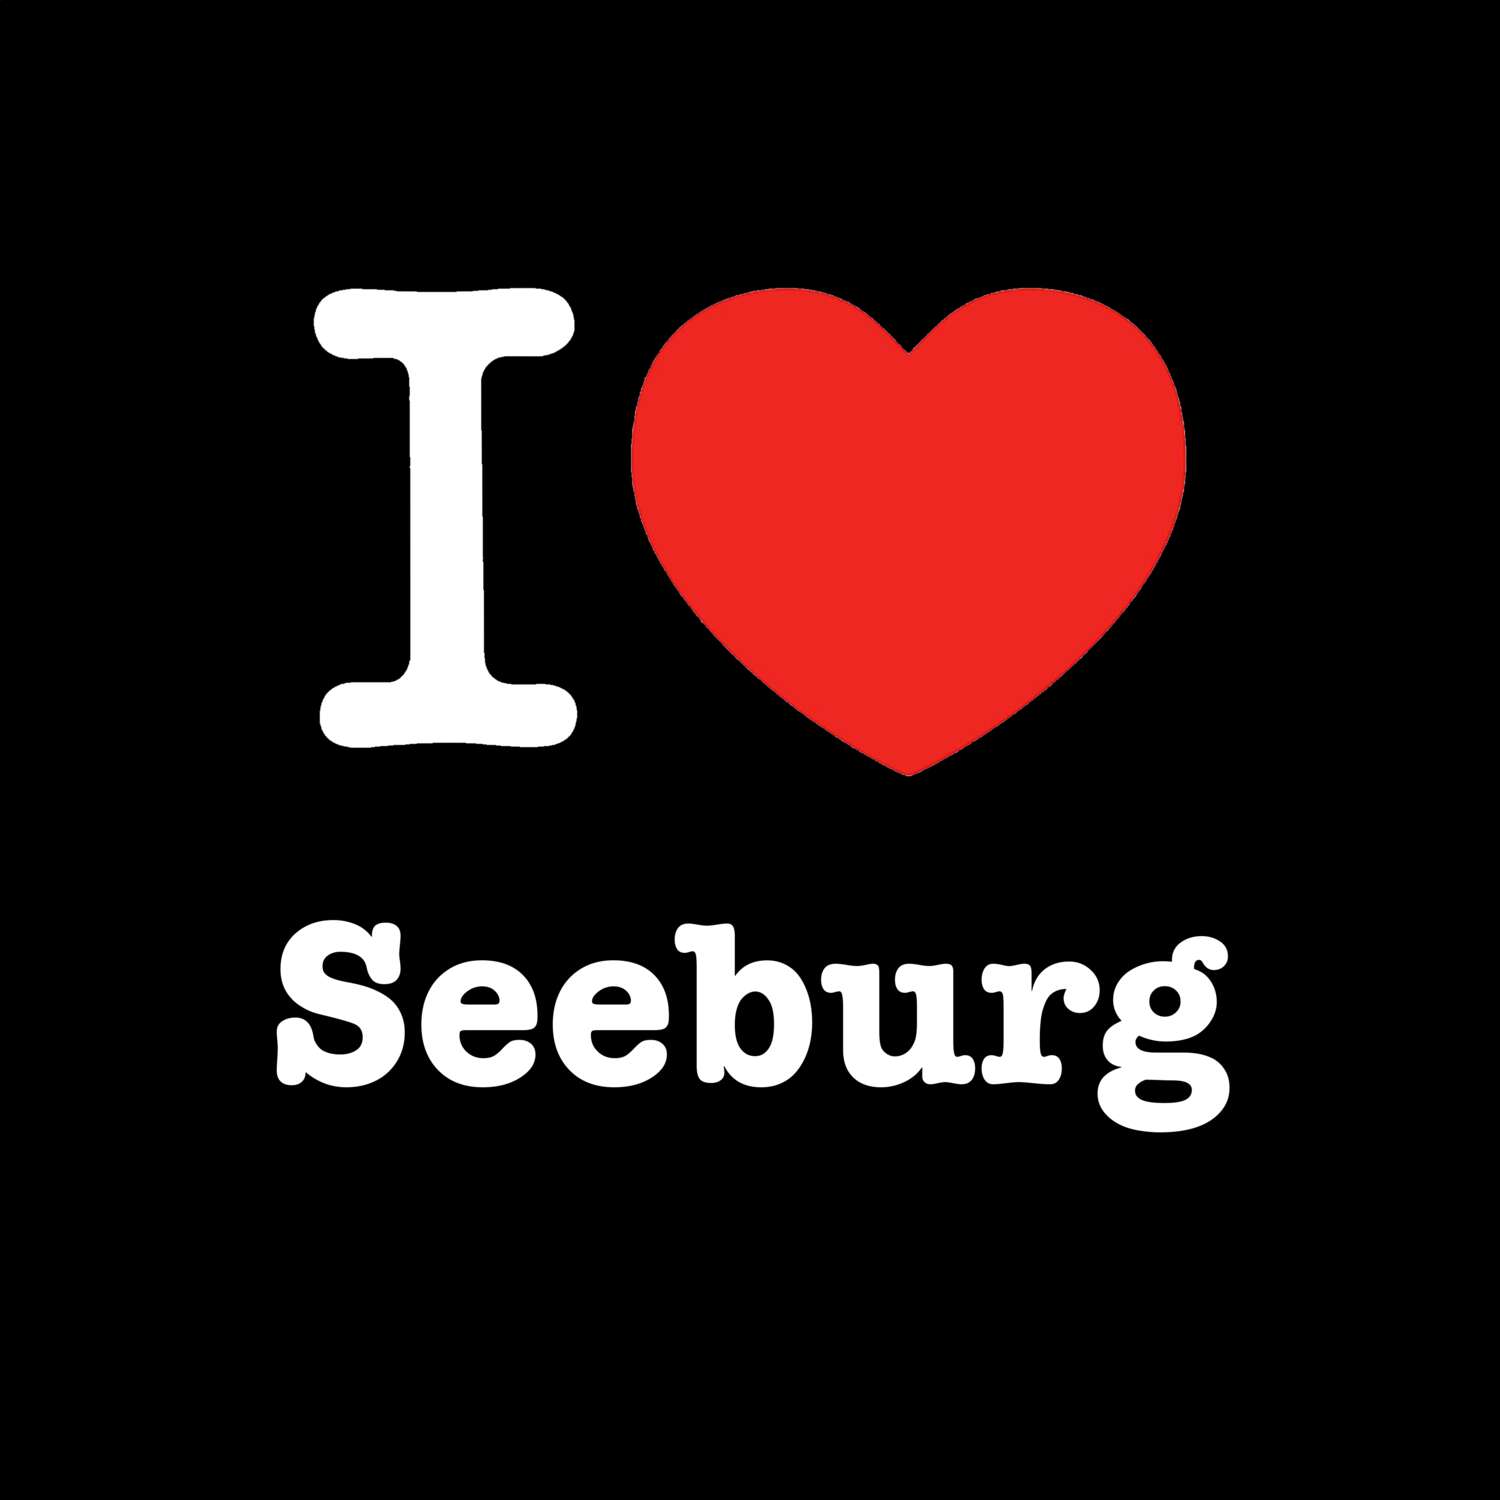 Seeburg T-Shirt »I love«